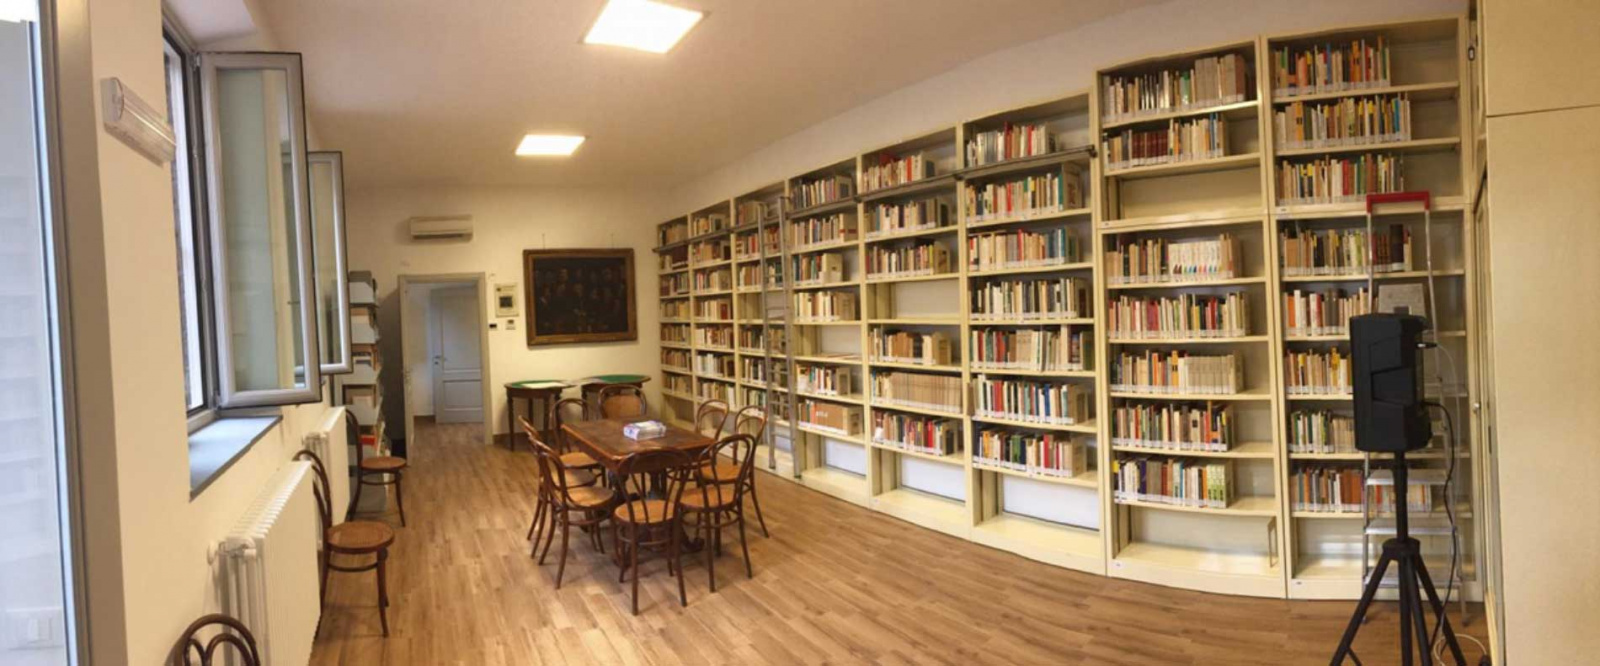 Protestant Cultural Centre and Library in Bergamo